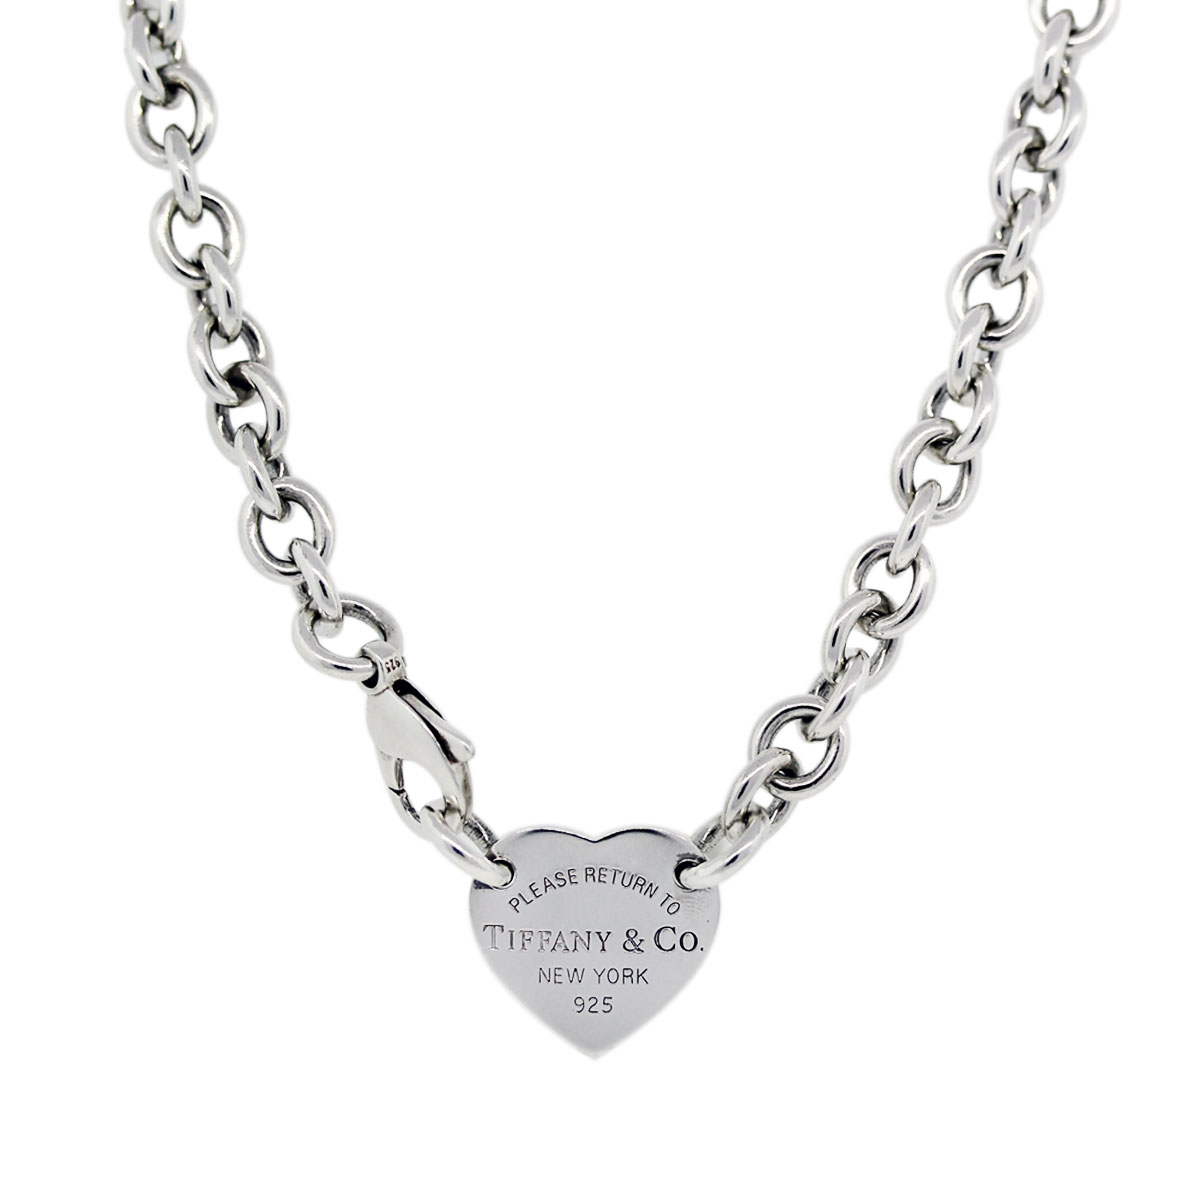 Tiffany & Co. SS Toggle Necklace with Heart Charm-Boca Raton